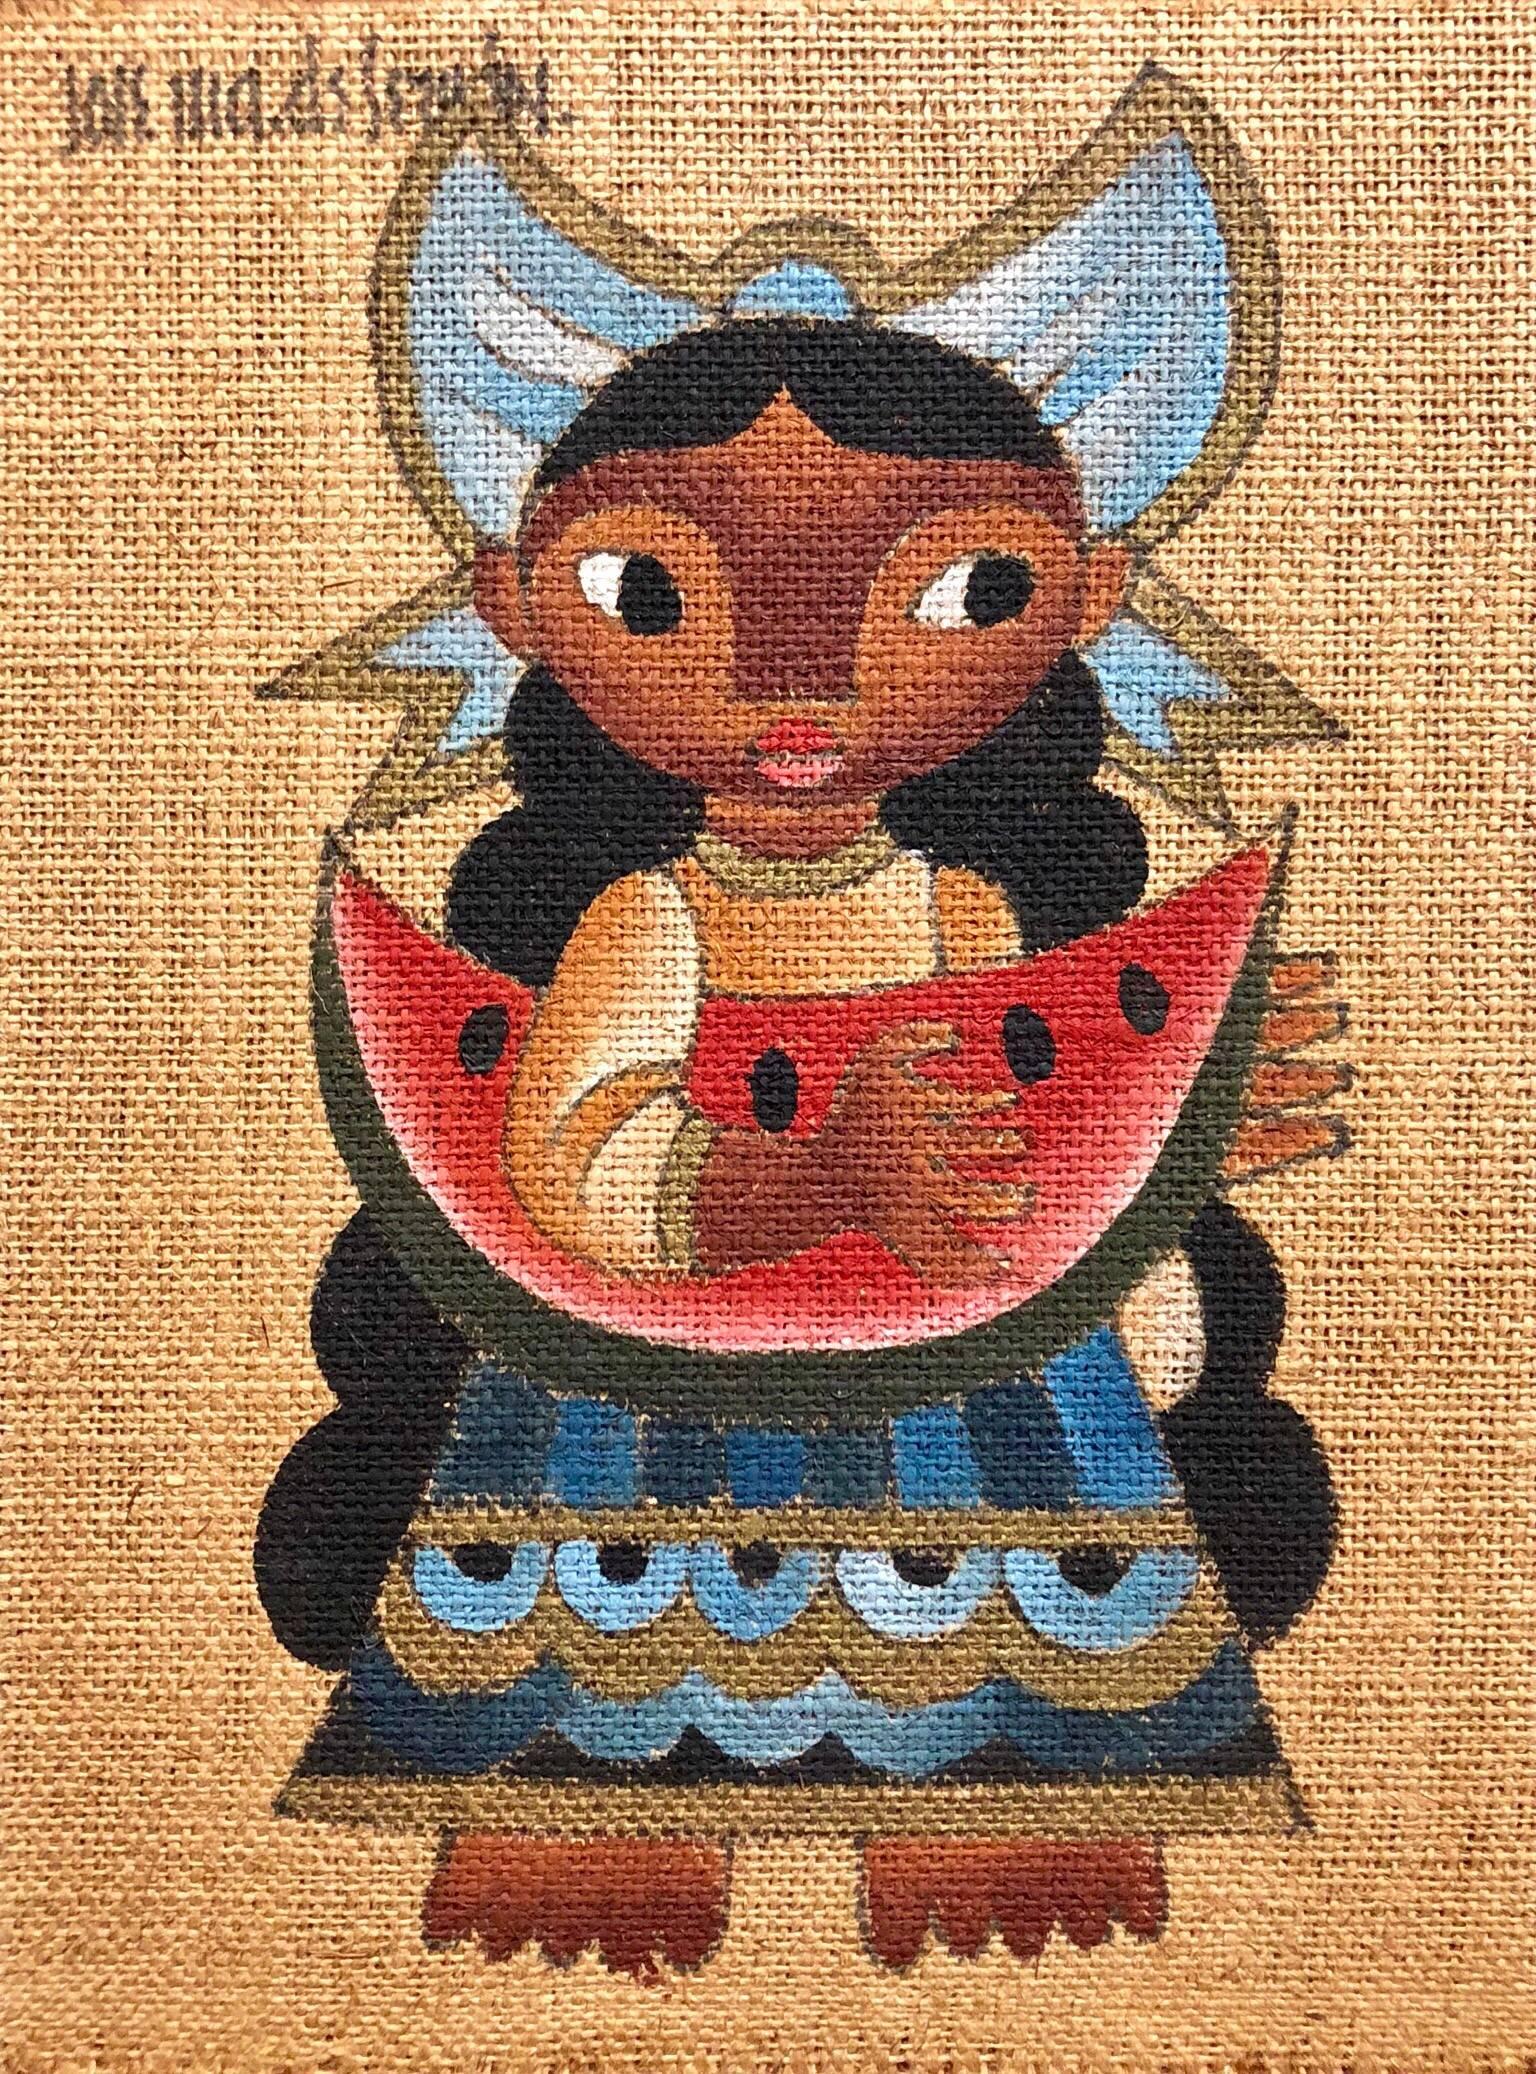 Folk Art Mexican Girl with Watermelon Oil Painting on Burlap